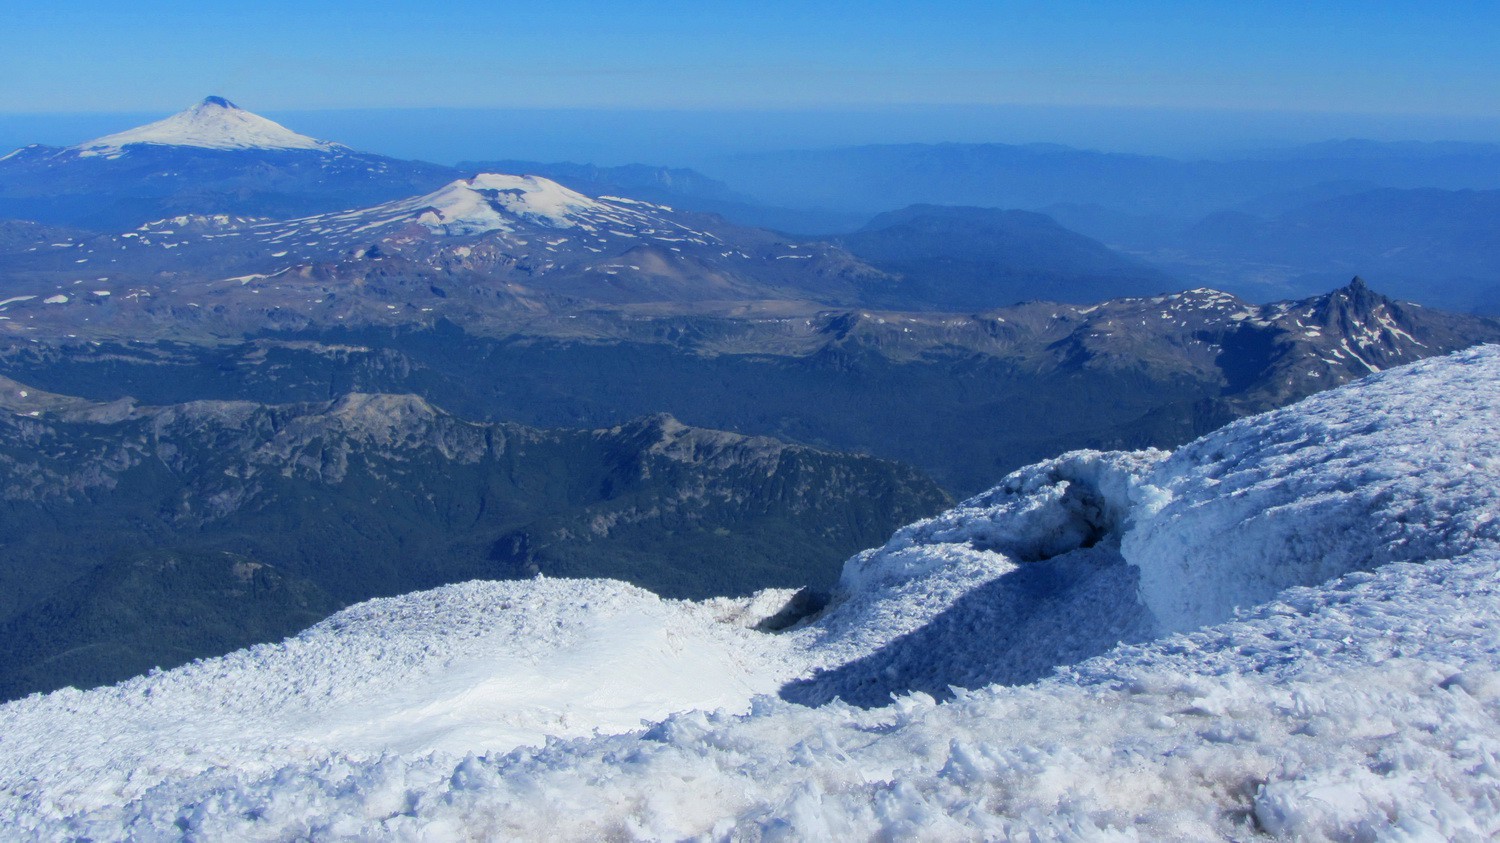 Volcanoes Villarrica and Quetrupillan from the top of Volcan Lanin